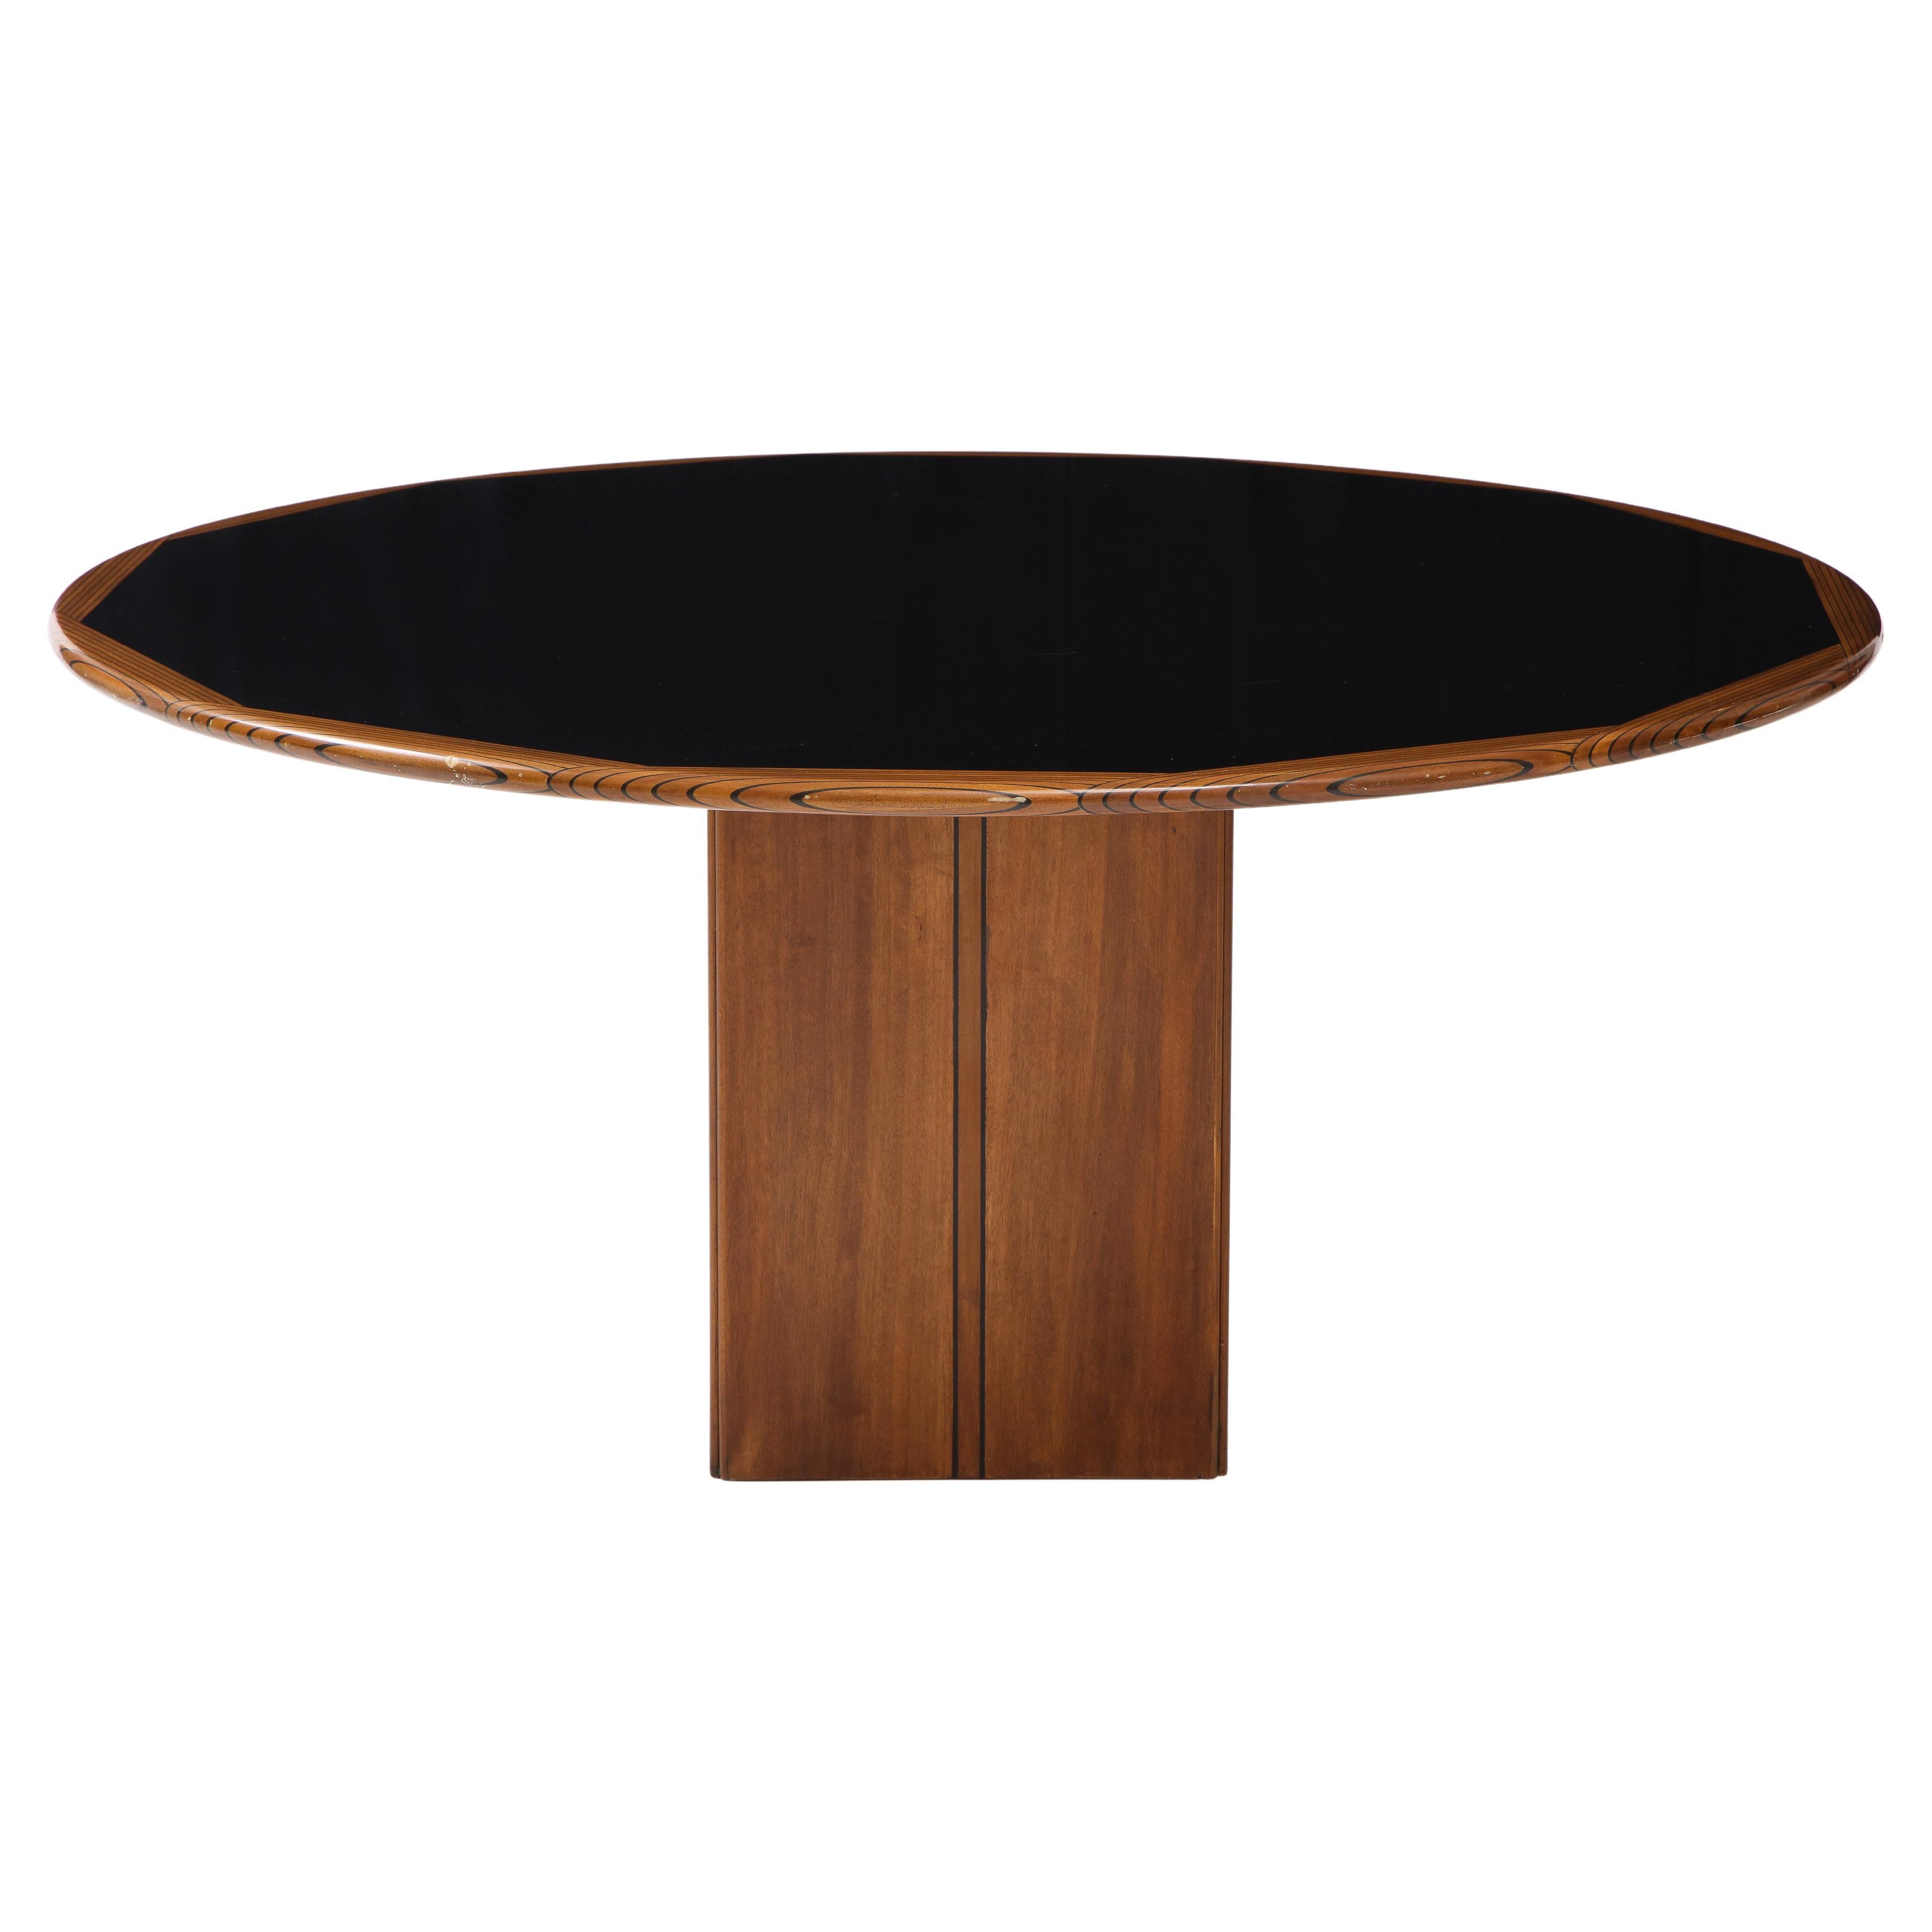 Round 'Africa' Table, Designed by Afra & Tobia Scarpa, for Maxalto 'Artona'